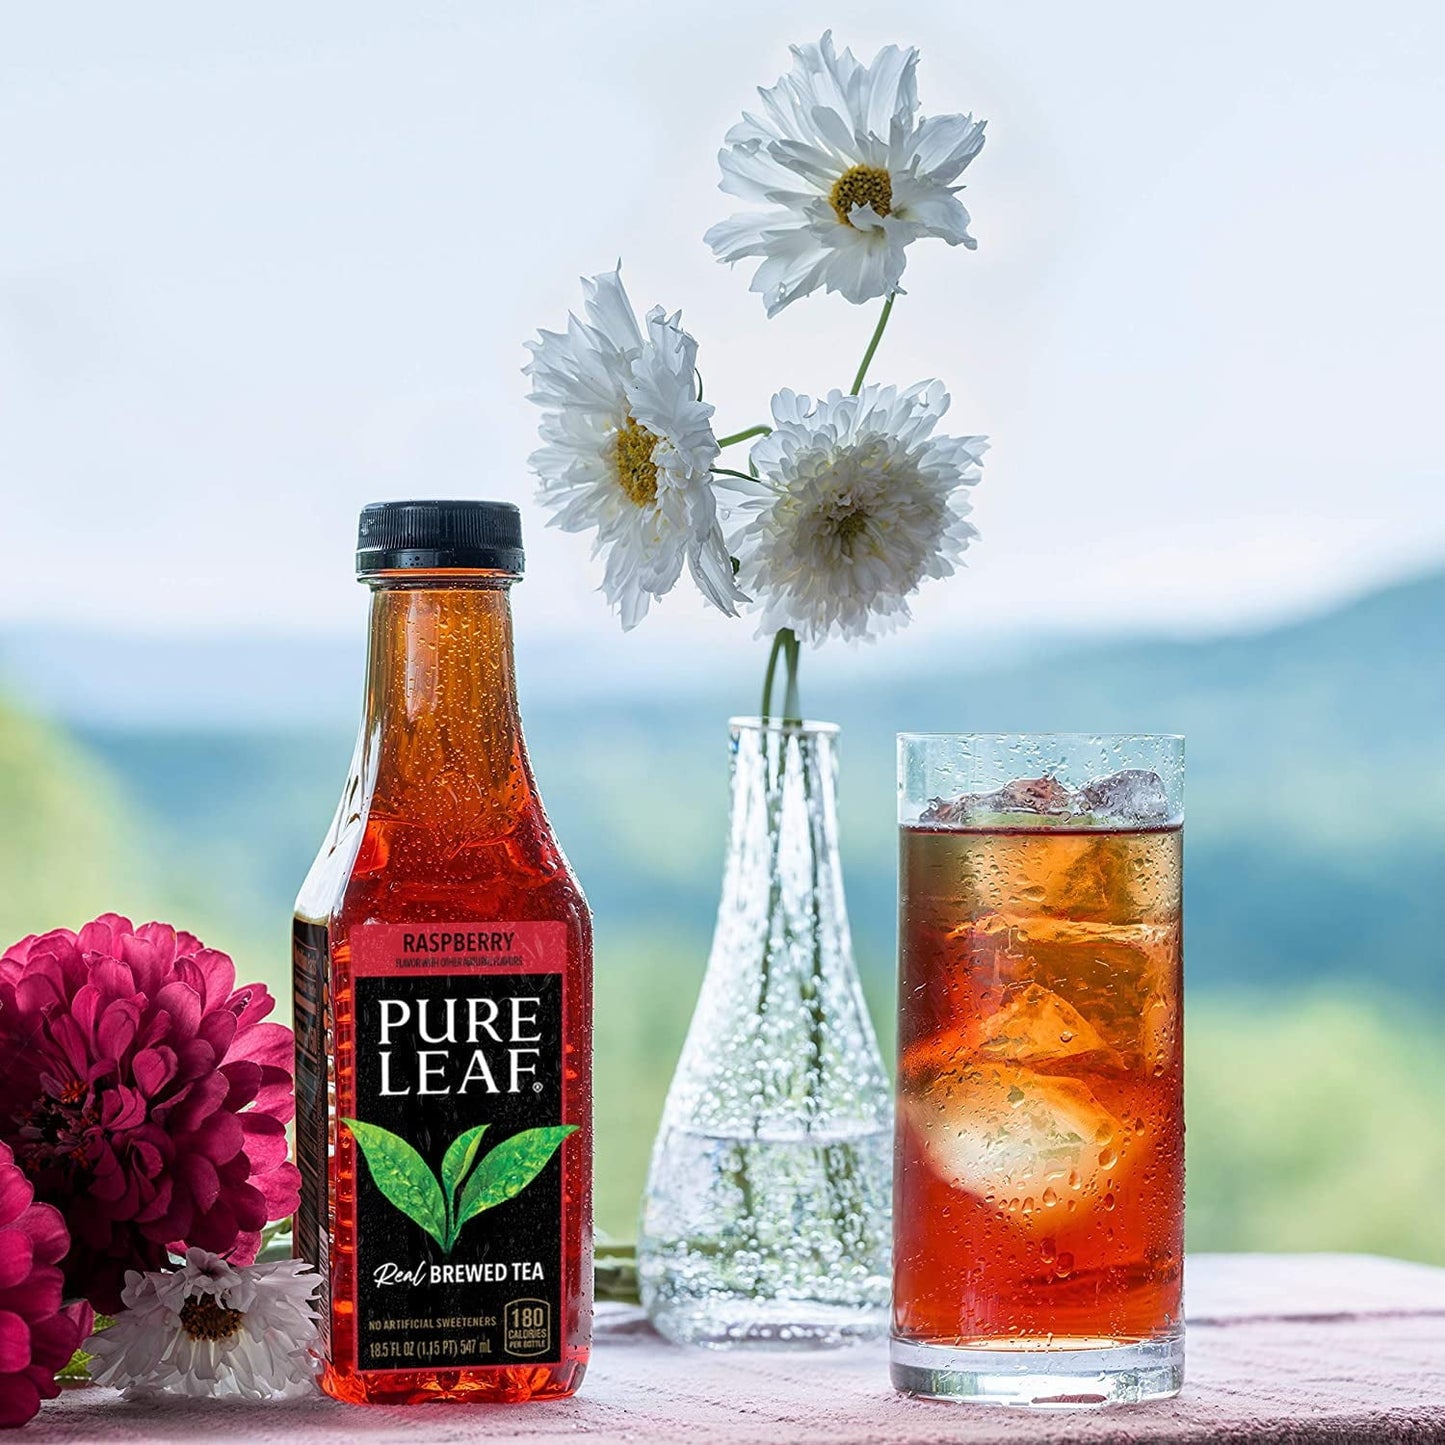 Pure Leaf Raspberry Real Brewed Iced Tea, 16.9 oz, 6 Pack Bottles